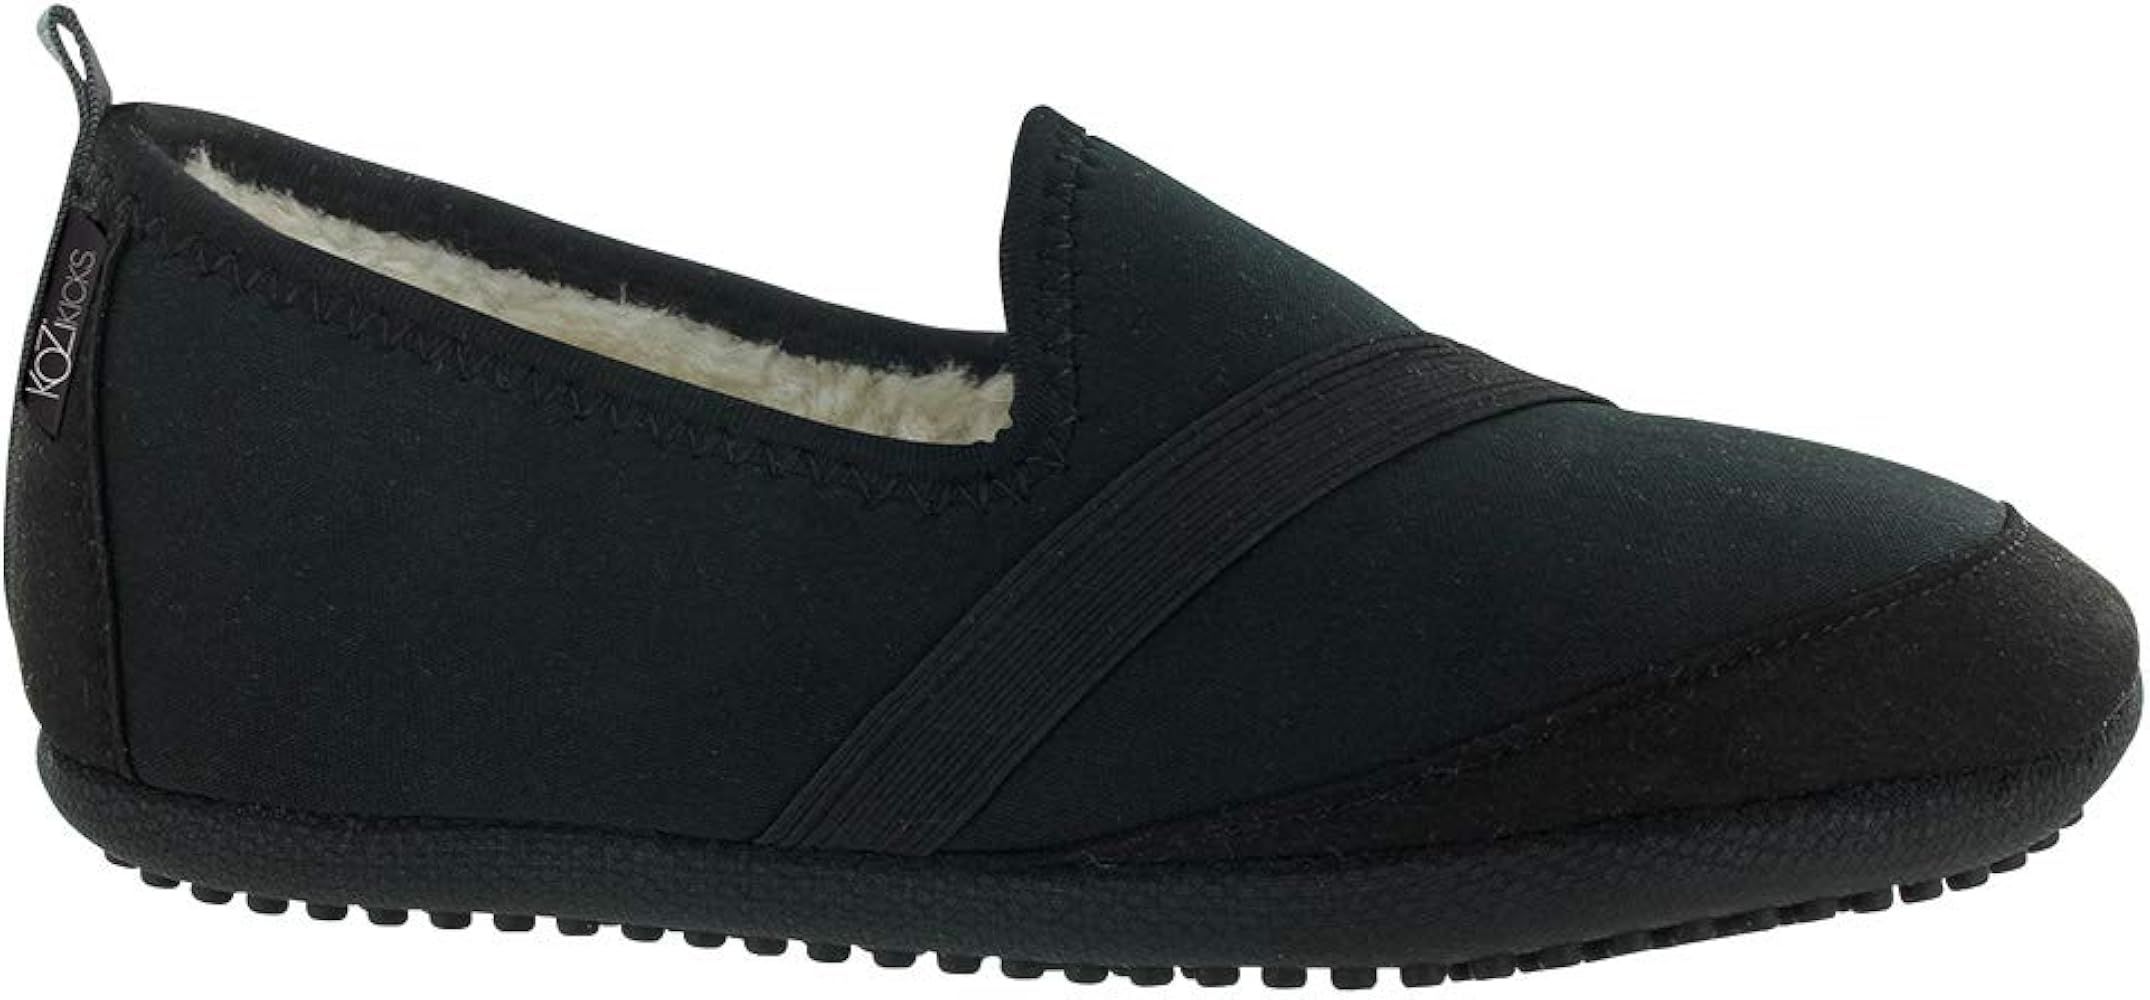 KOZIKICKS Active Lifestyle Slippers Indoor/Outdoor Footwear Shoes for Women | Amazon (US)